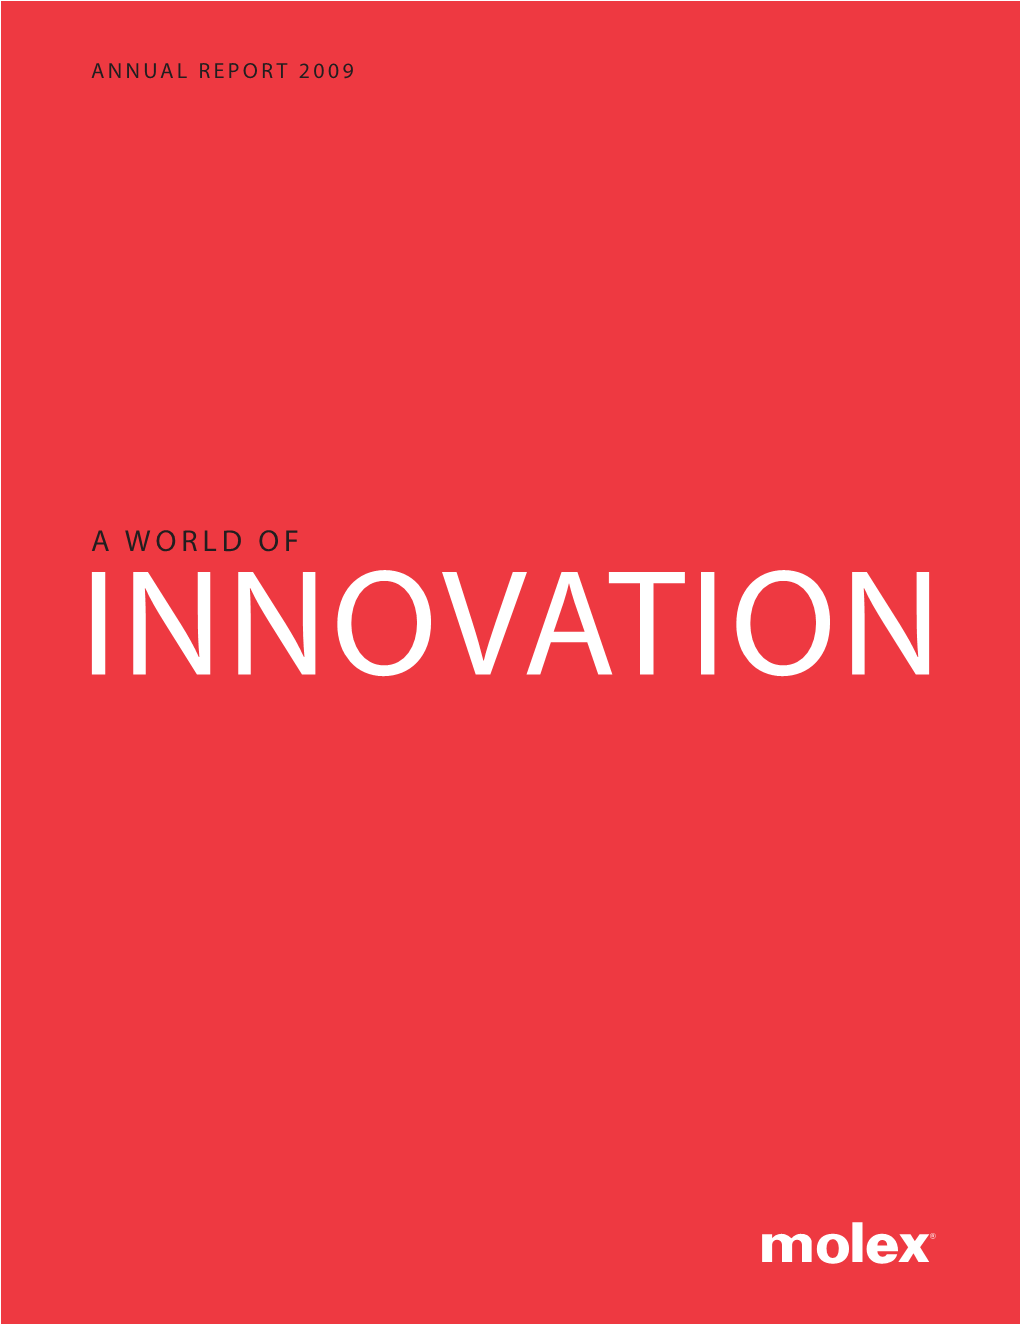 A World of Innovation Financial Highlights